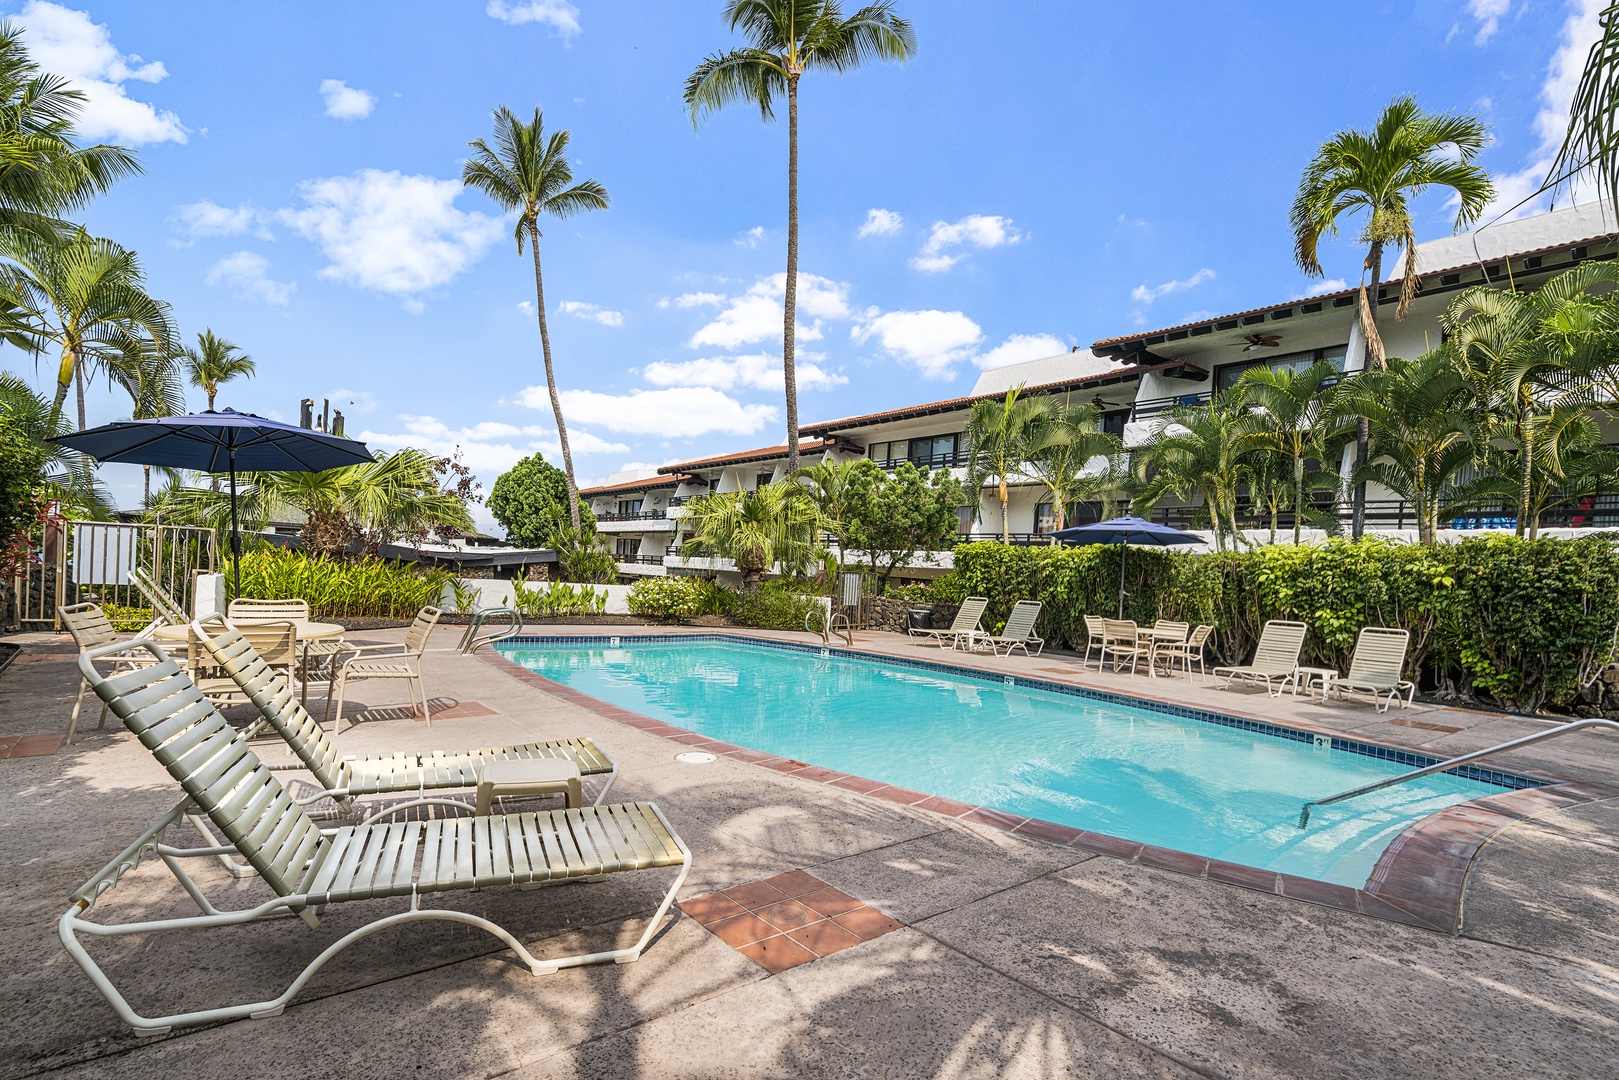 Kailua Kona Vacation Rentals, Casa De Emdeko 336 - Lounge pool side!